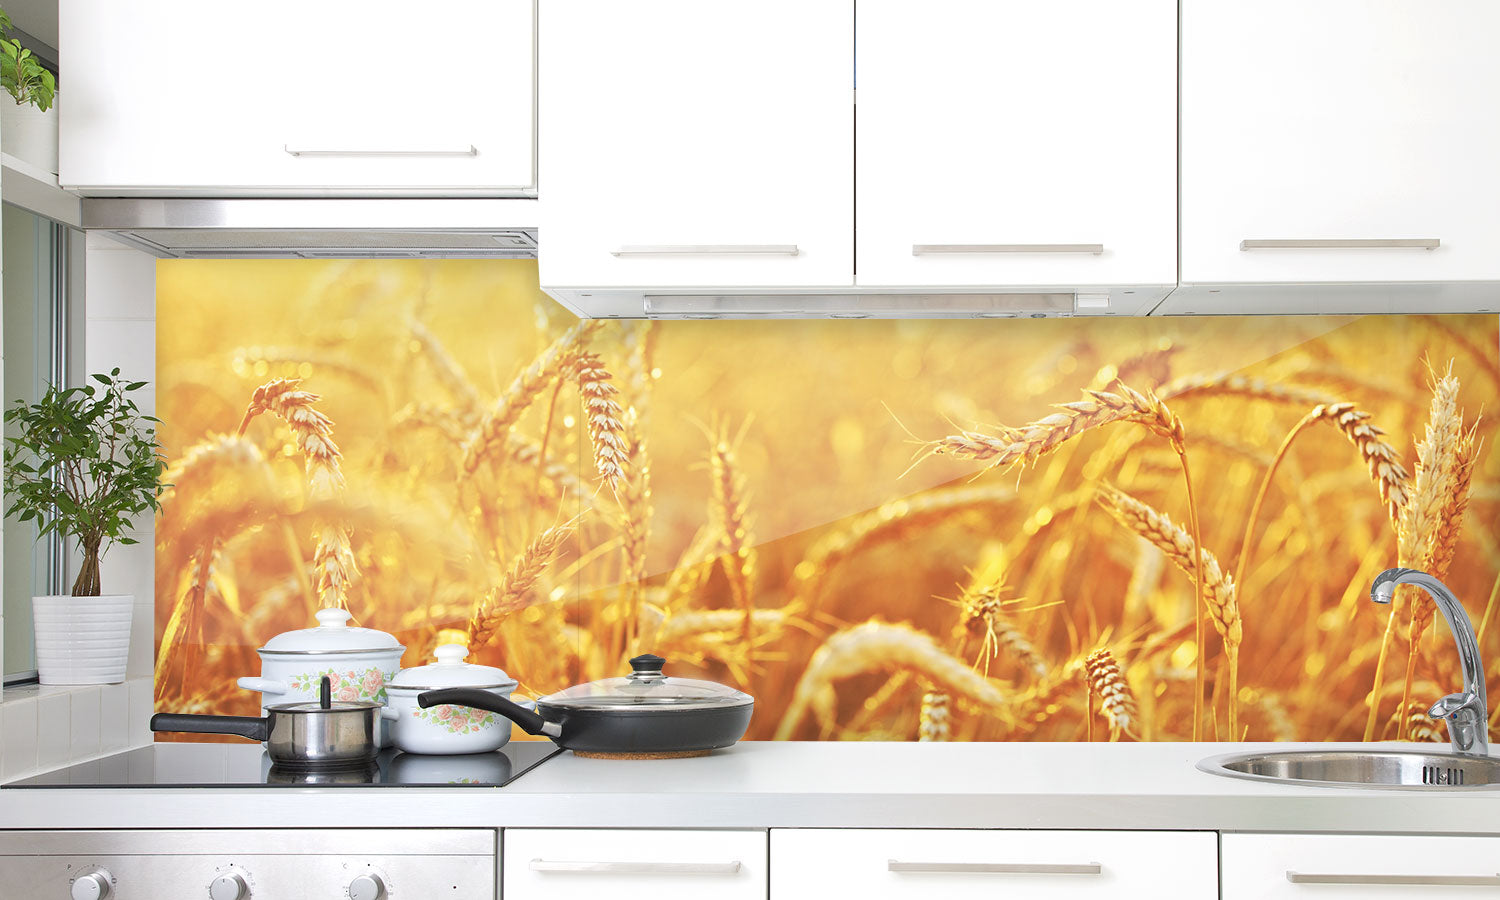 Paneli za kuhinje Wheat field - Stakleni / PVC ploče / Pleksiglas -  sa printom za kuhinju, Zidne obloge PKU017